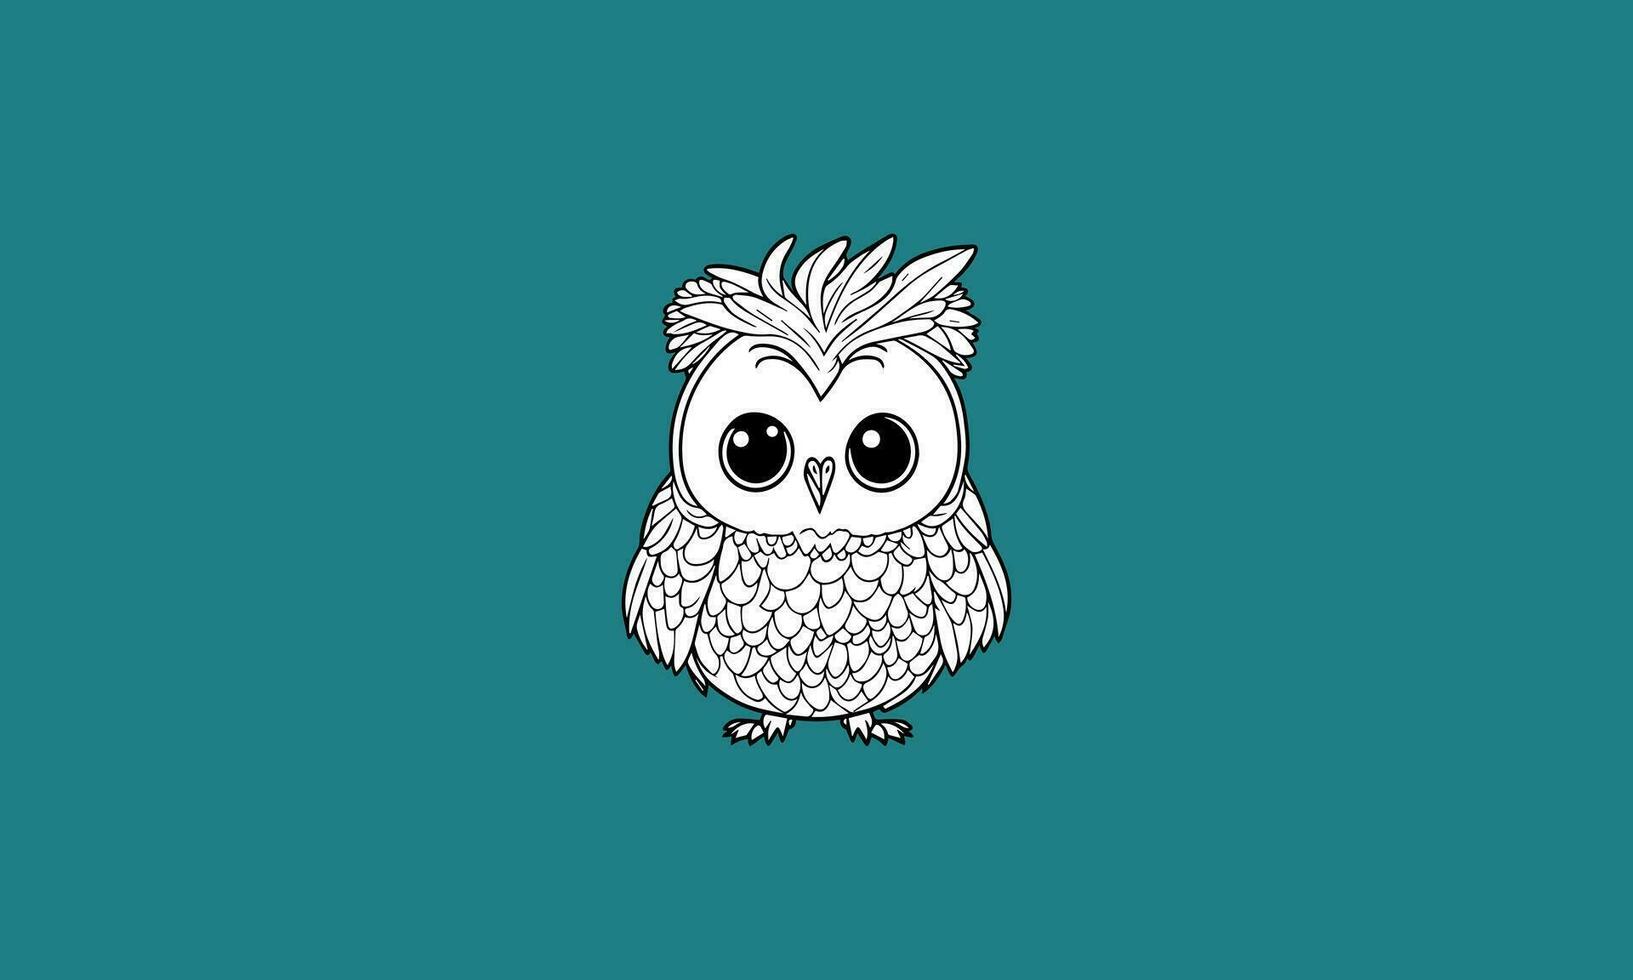 happy cute owl kawaii line art design vector